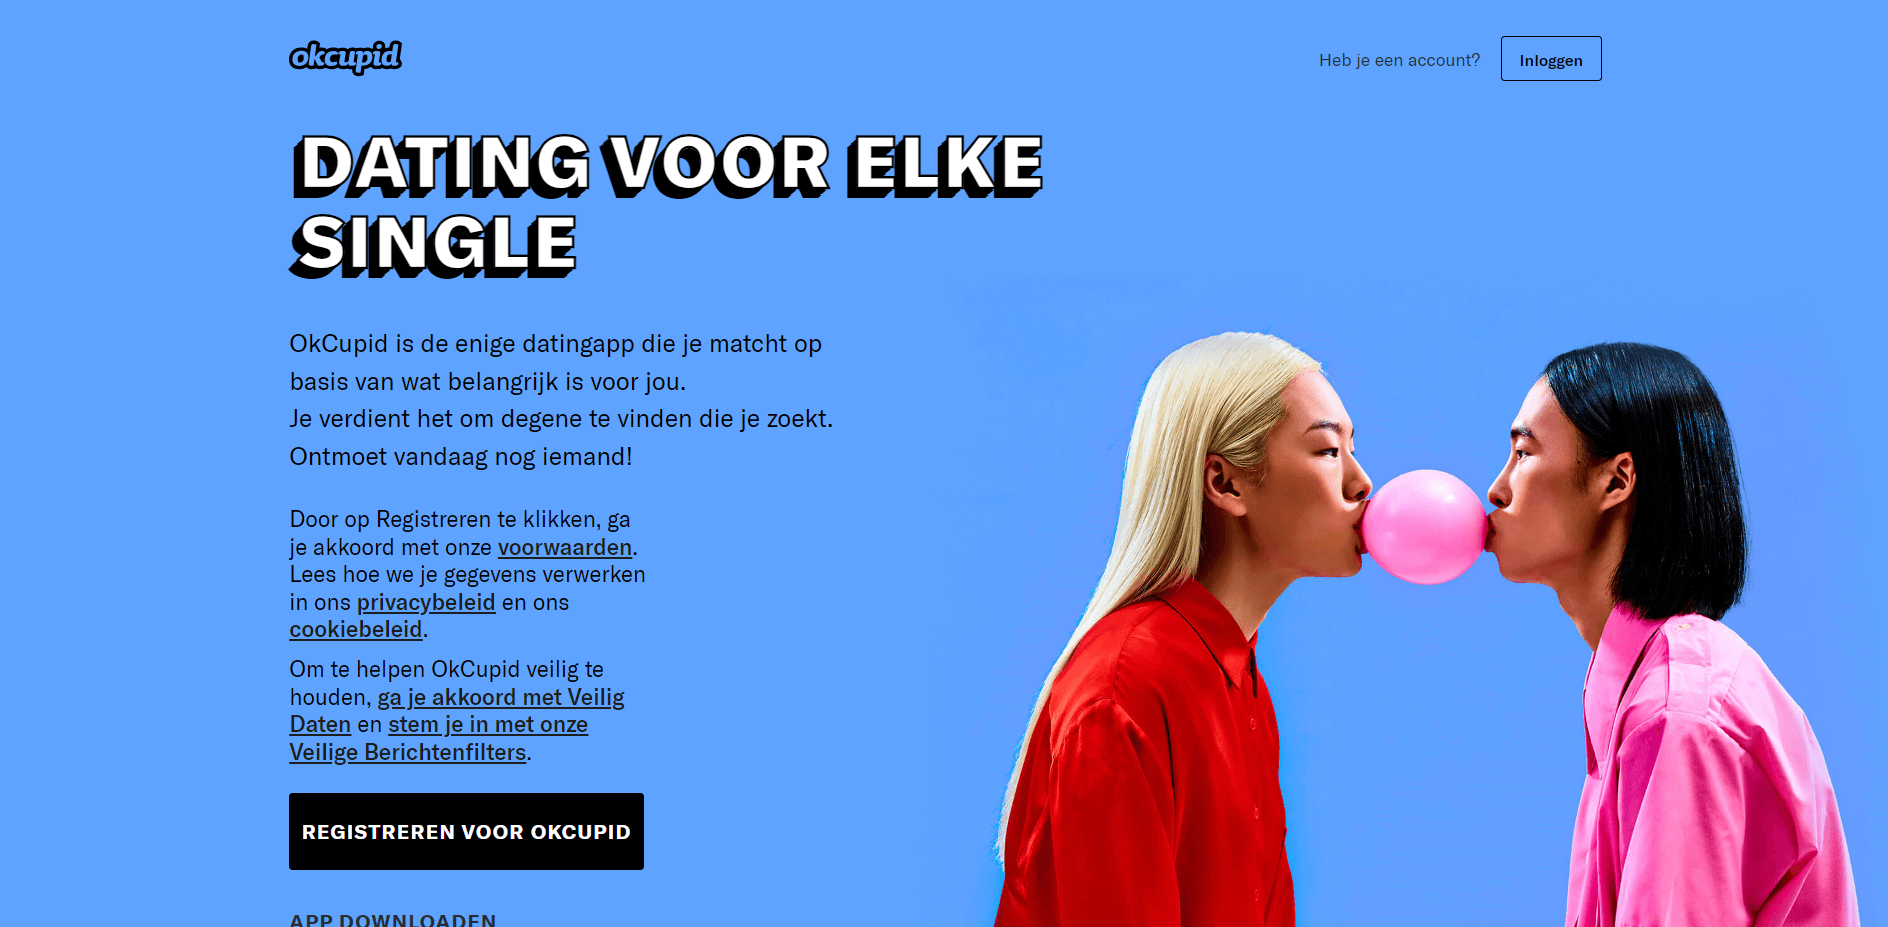 OkCupid Nederland